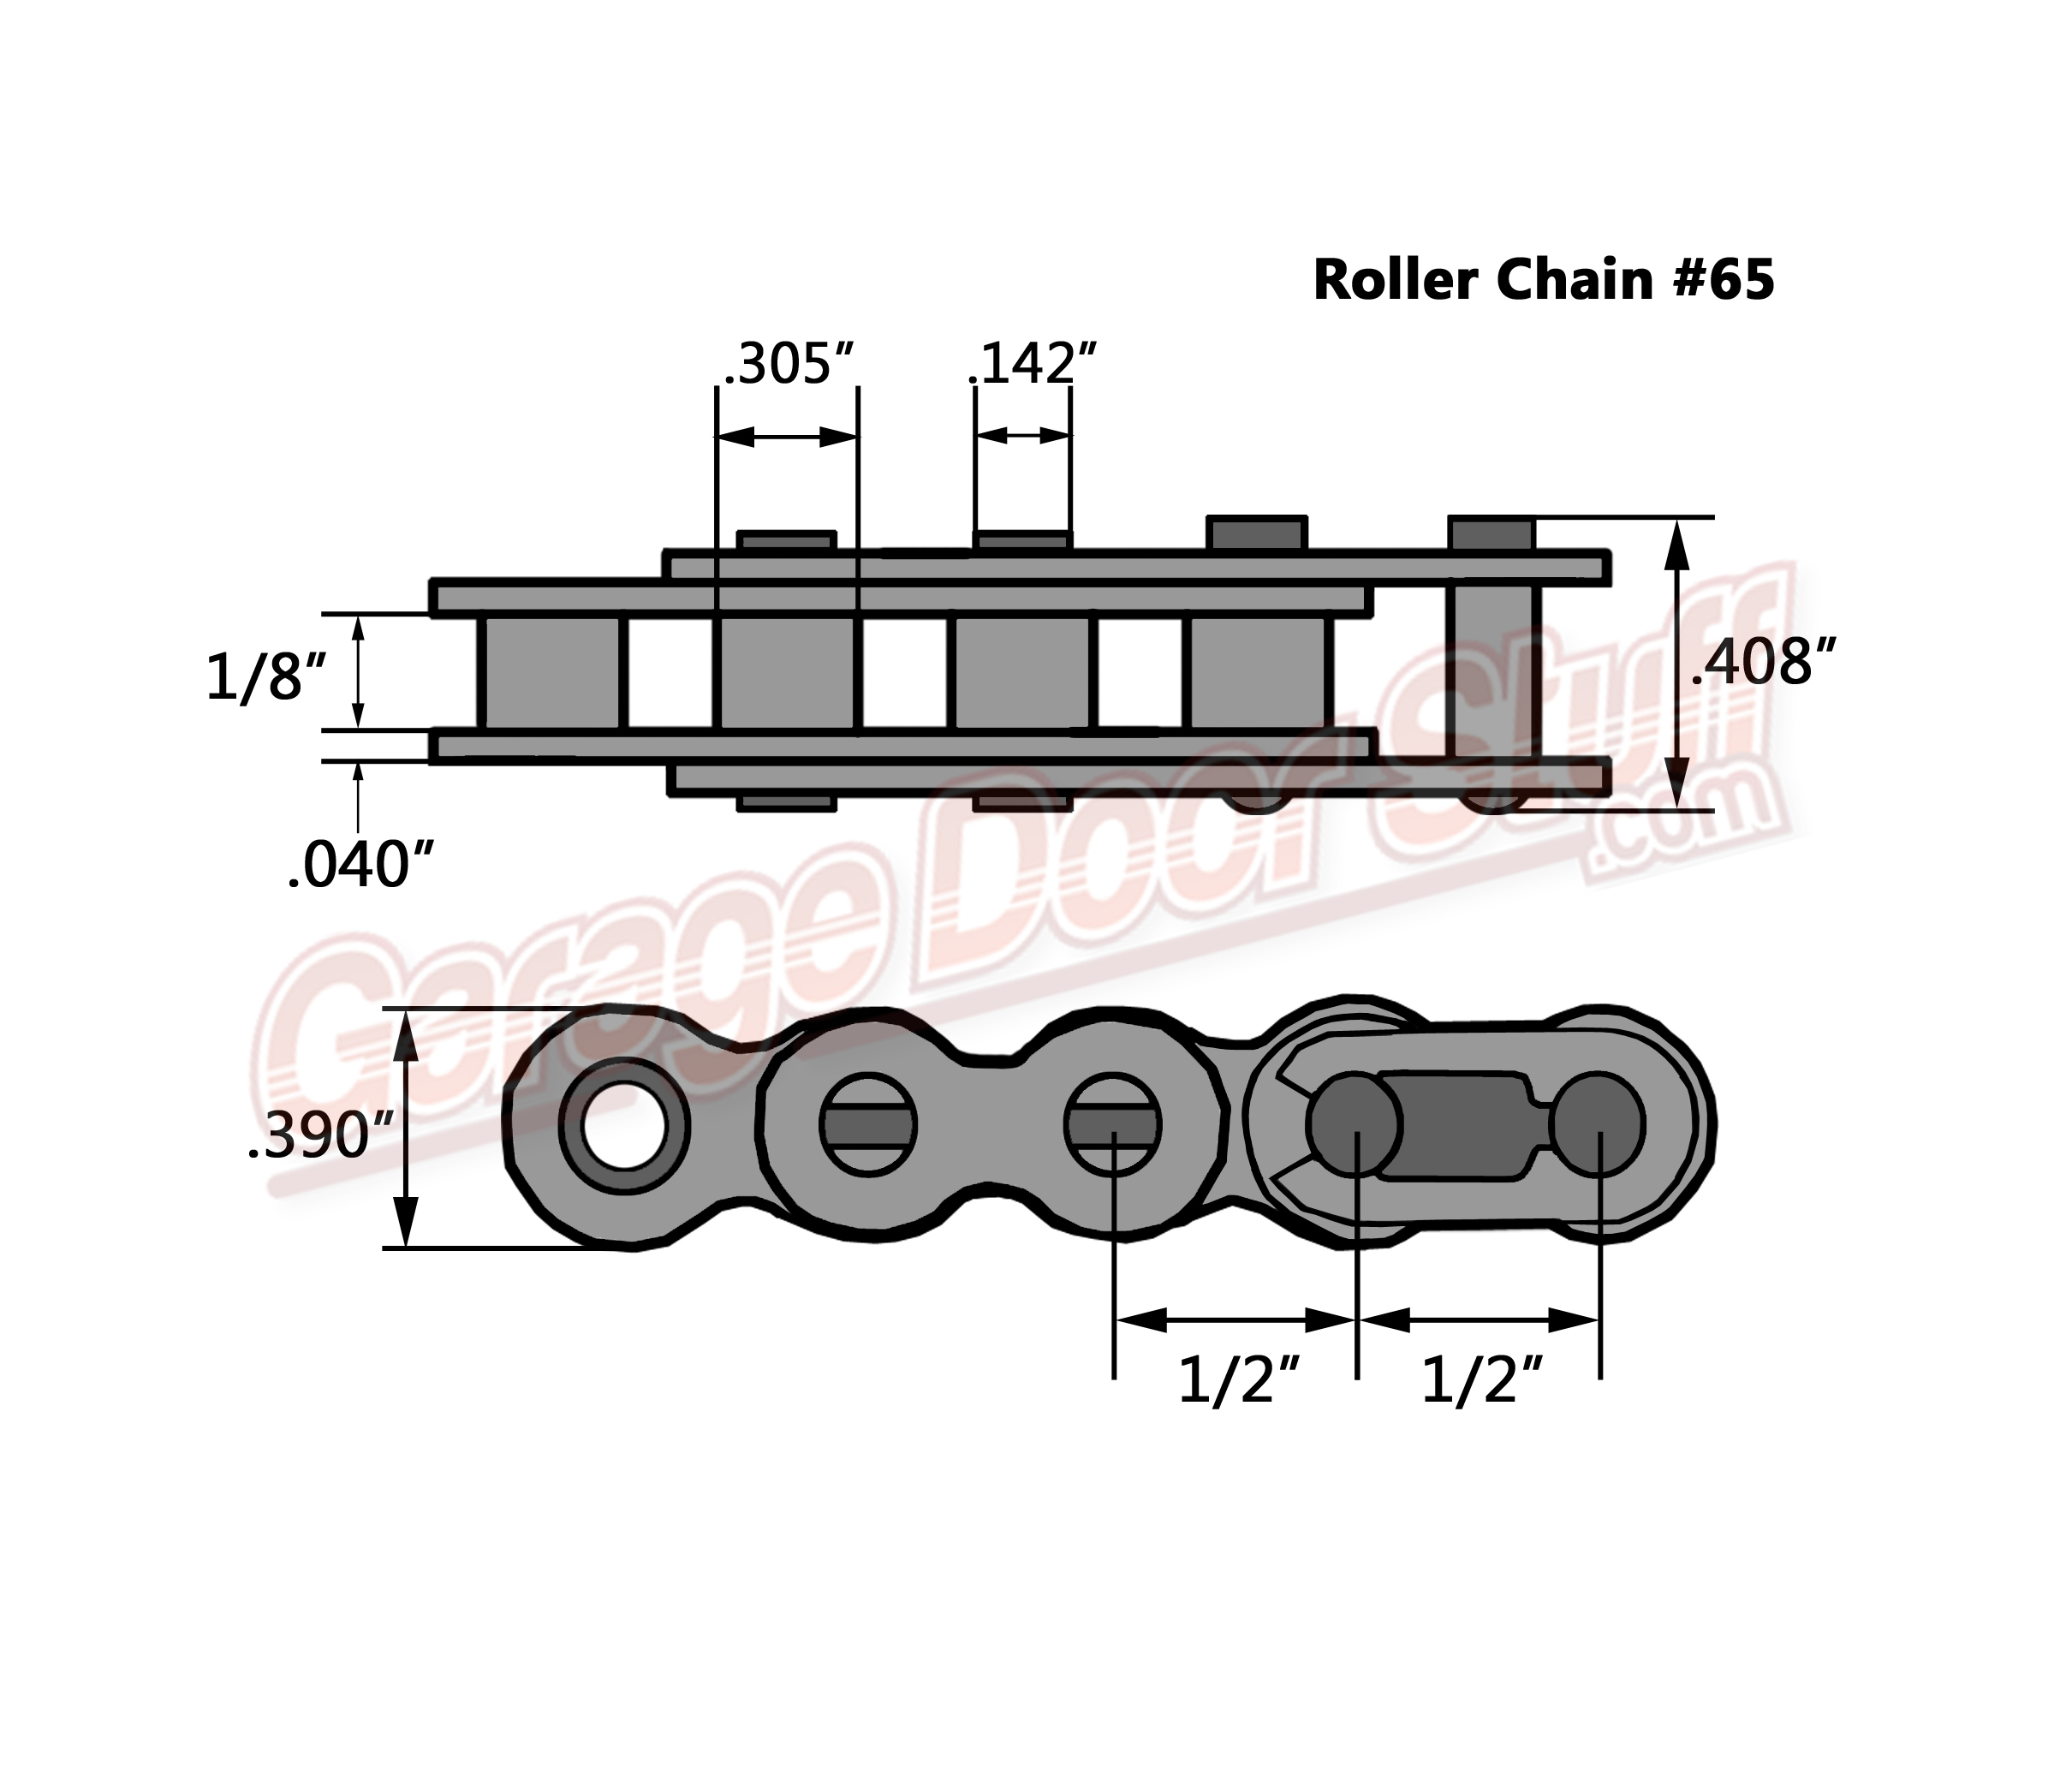 Roller Chain #65 